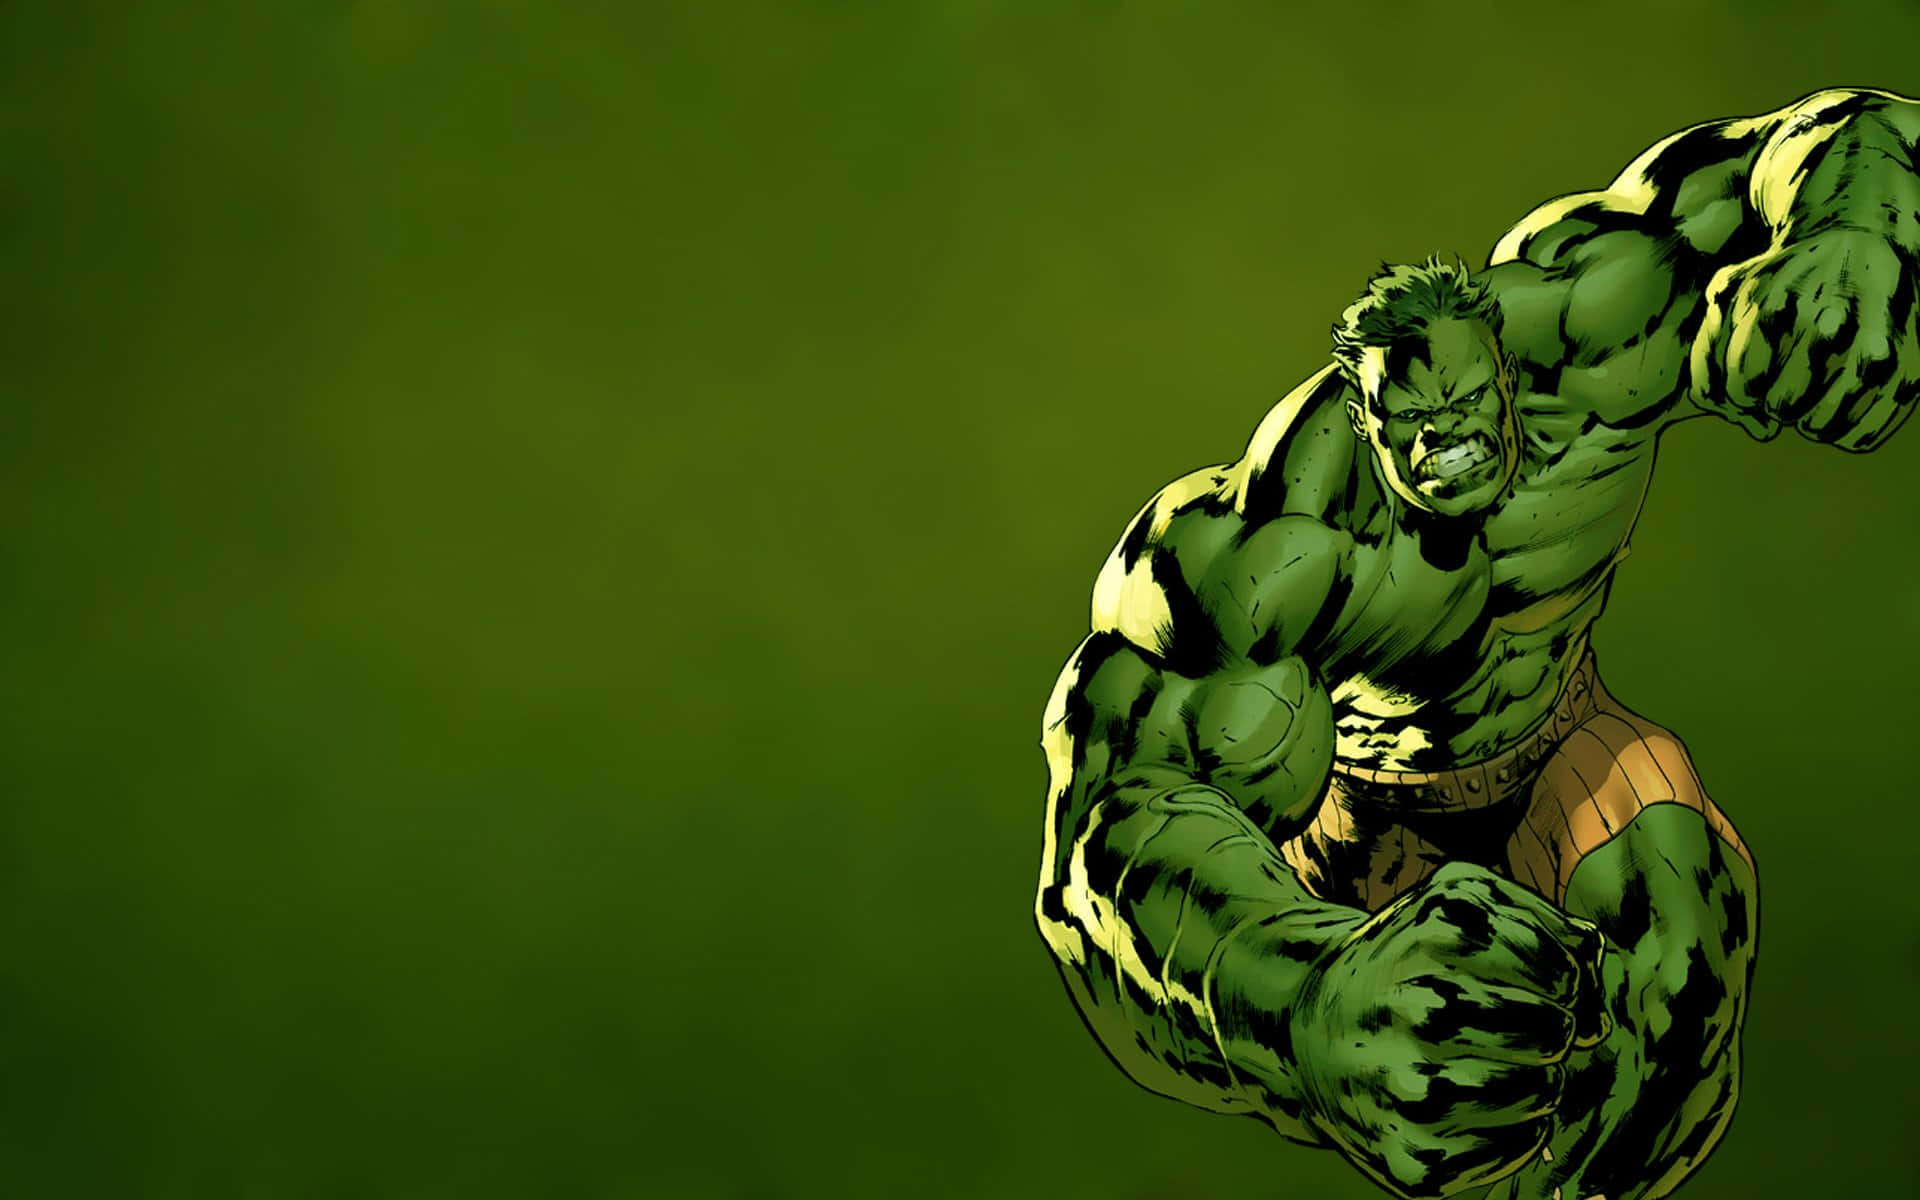 The Incredible Hulk, Ready to Unleash His Fury